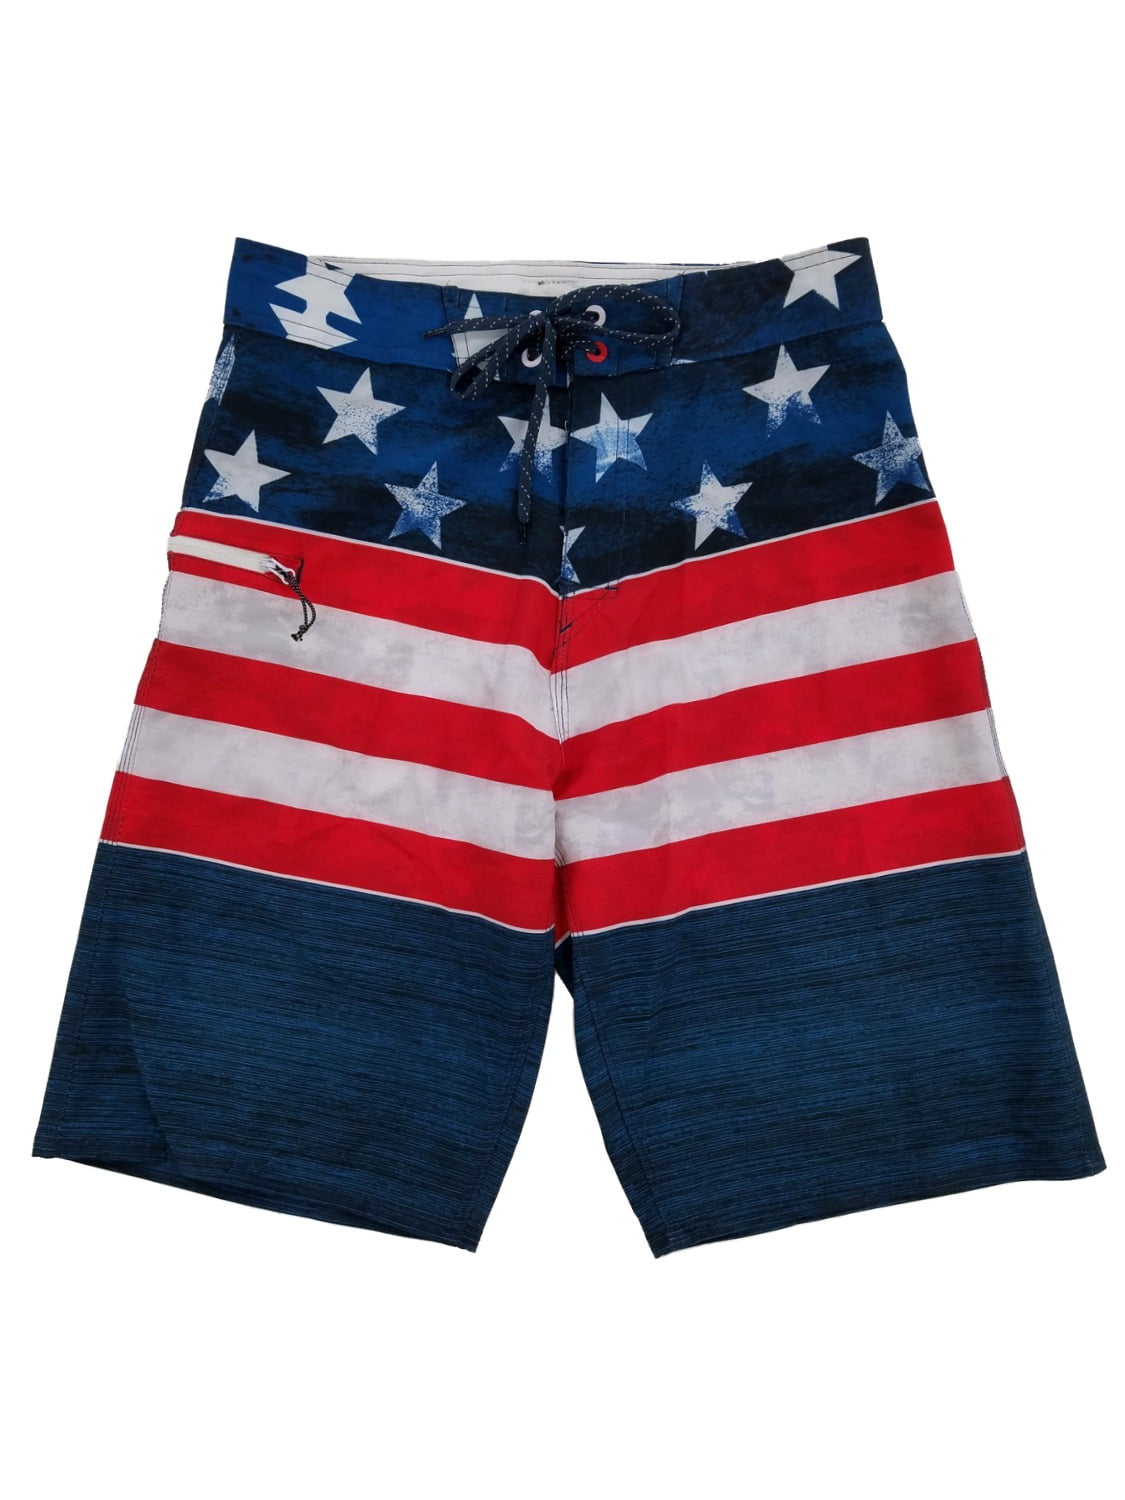 Mens American Flag Distressed Retro Vintage Board Shorts Swim Trunks